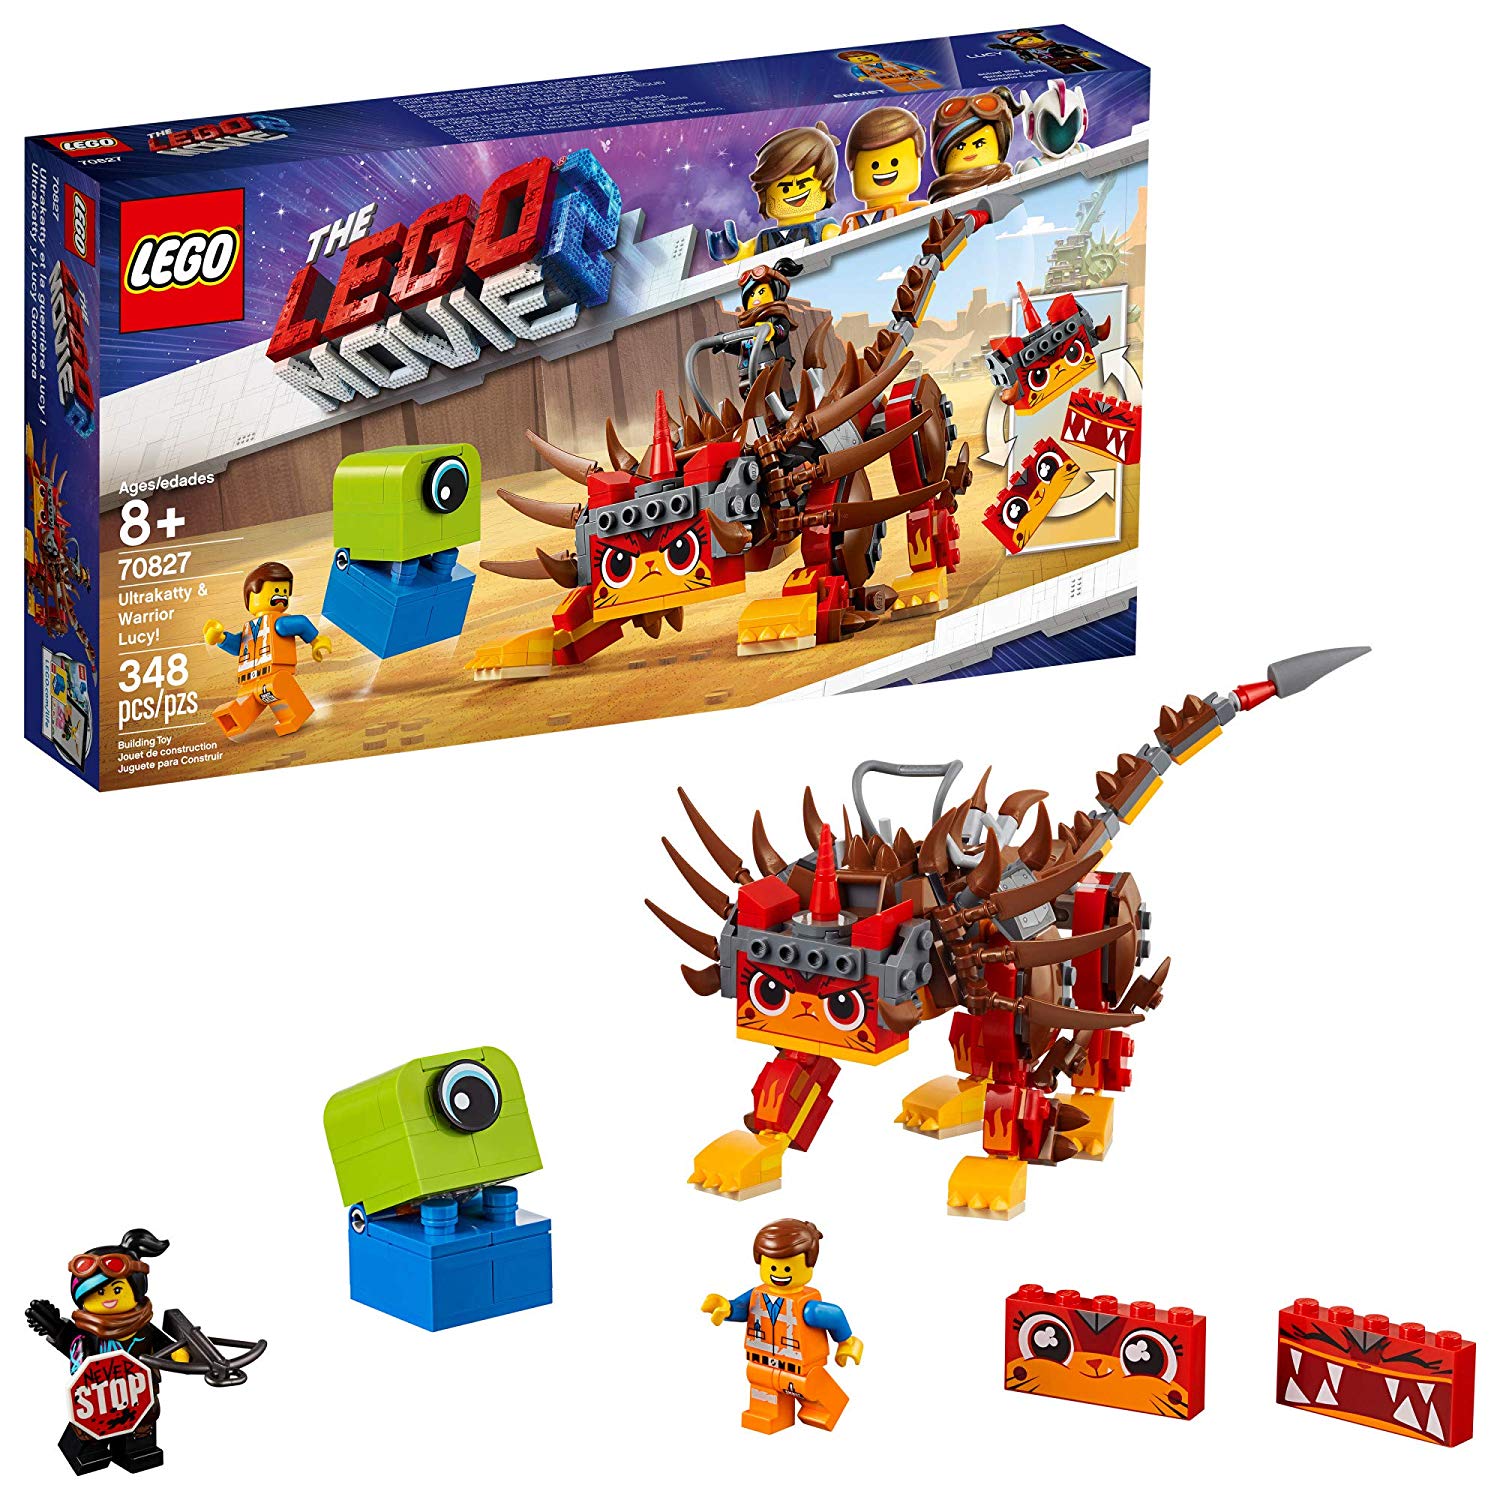 Lego The Movie 2 - Ultrakatty & Warrior Lucy! 70827 Building Kit